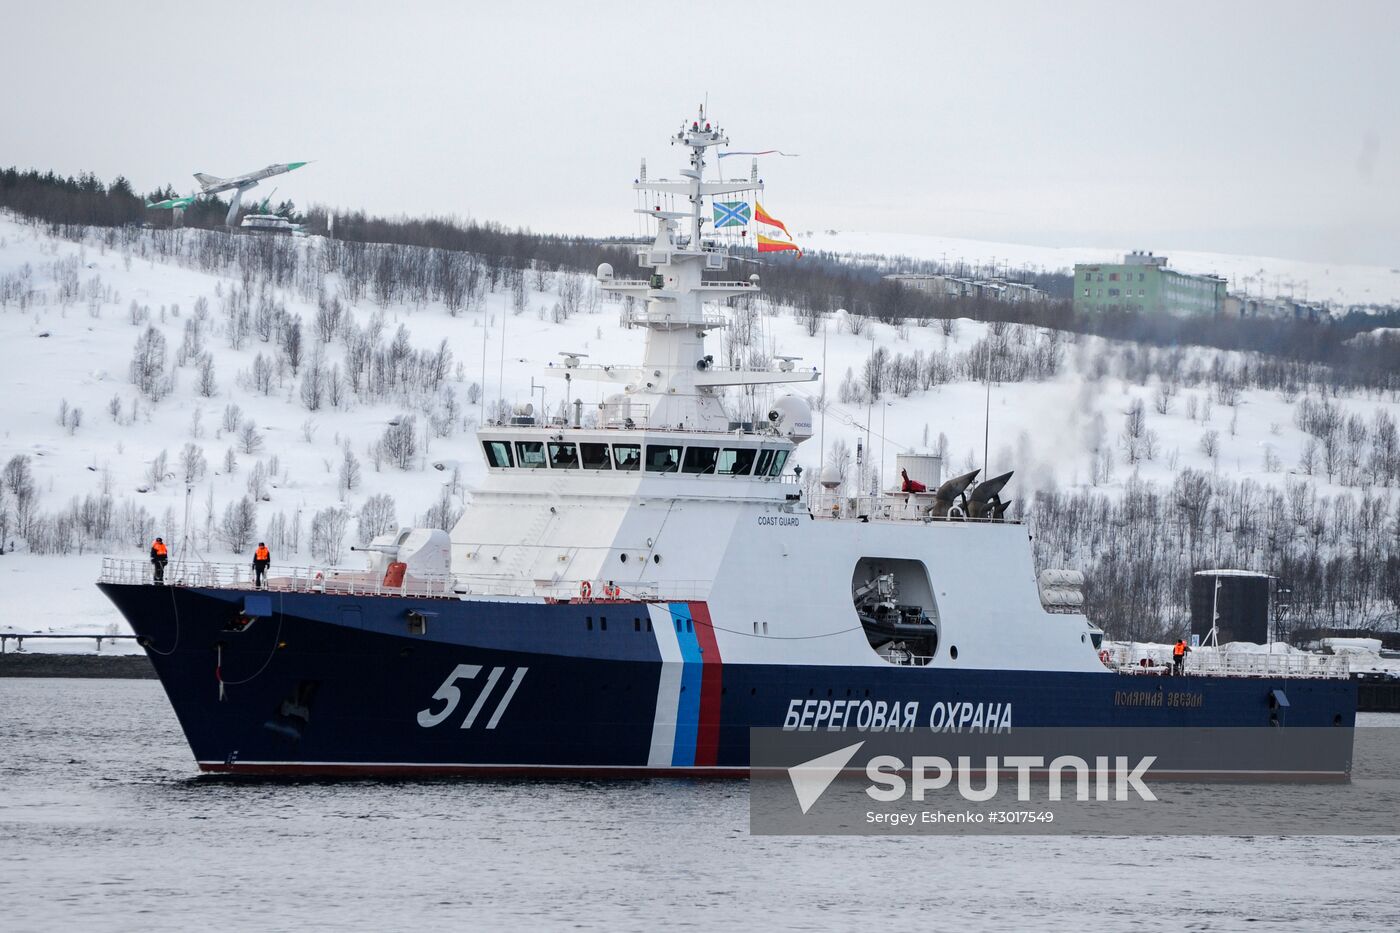 Ceremonial greetings for Polyarnaya Zvezda coast guard ship